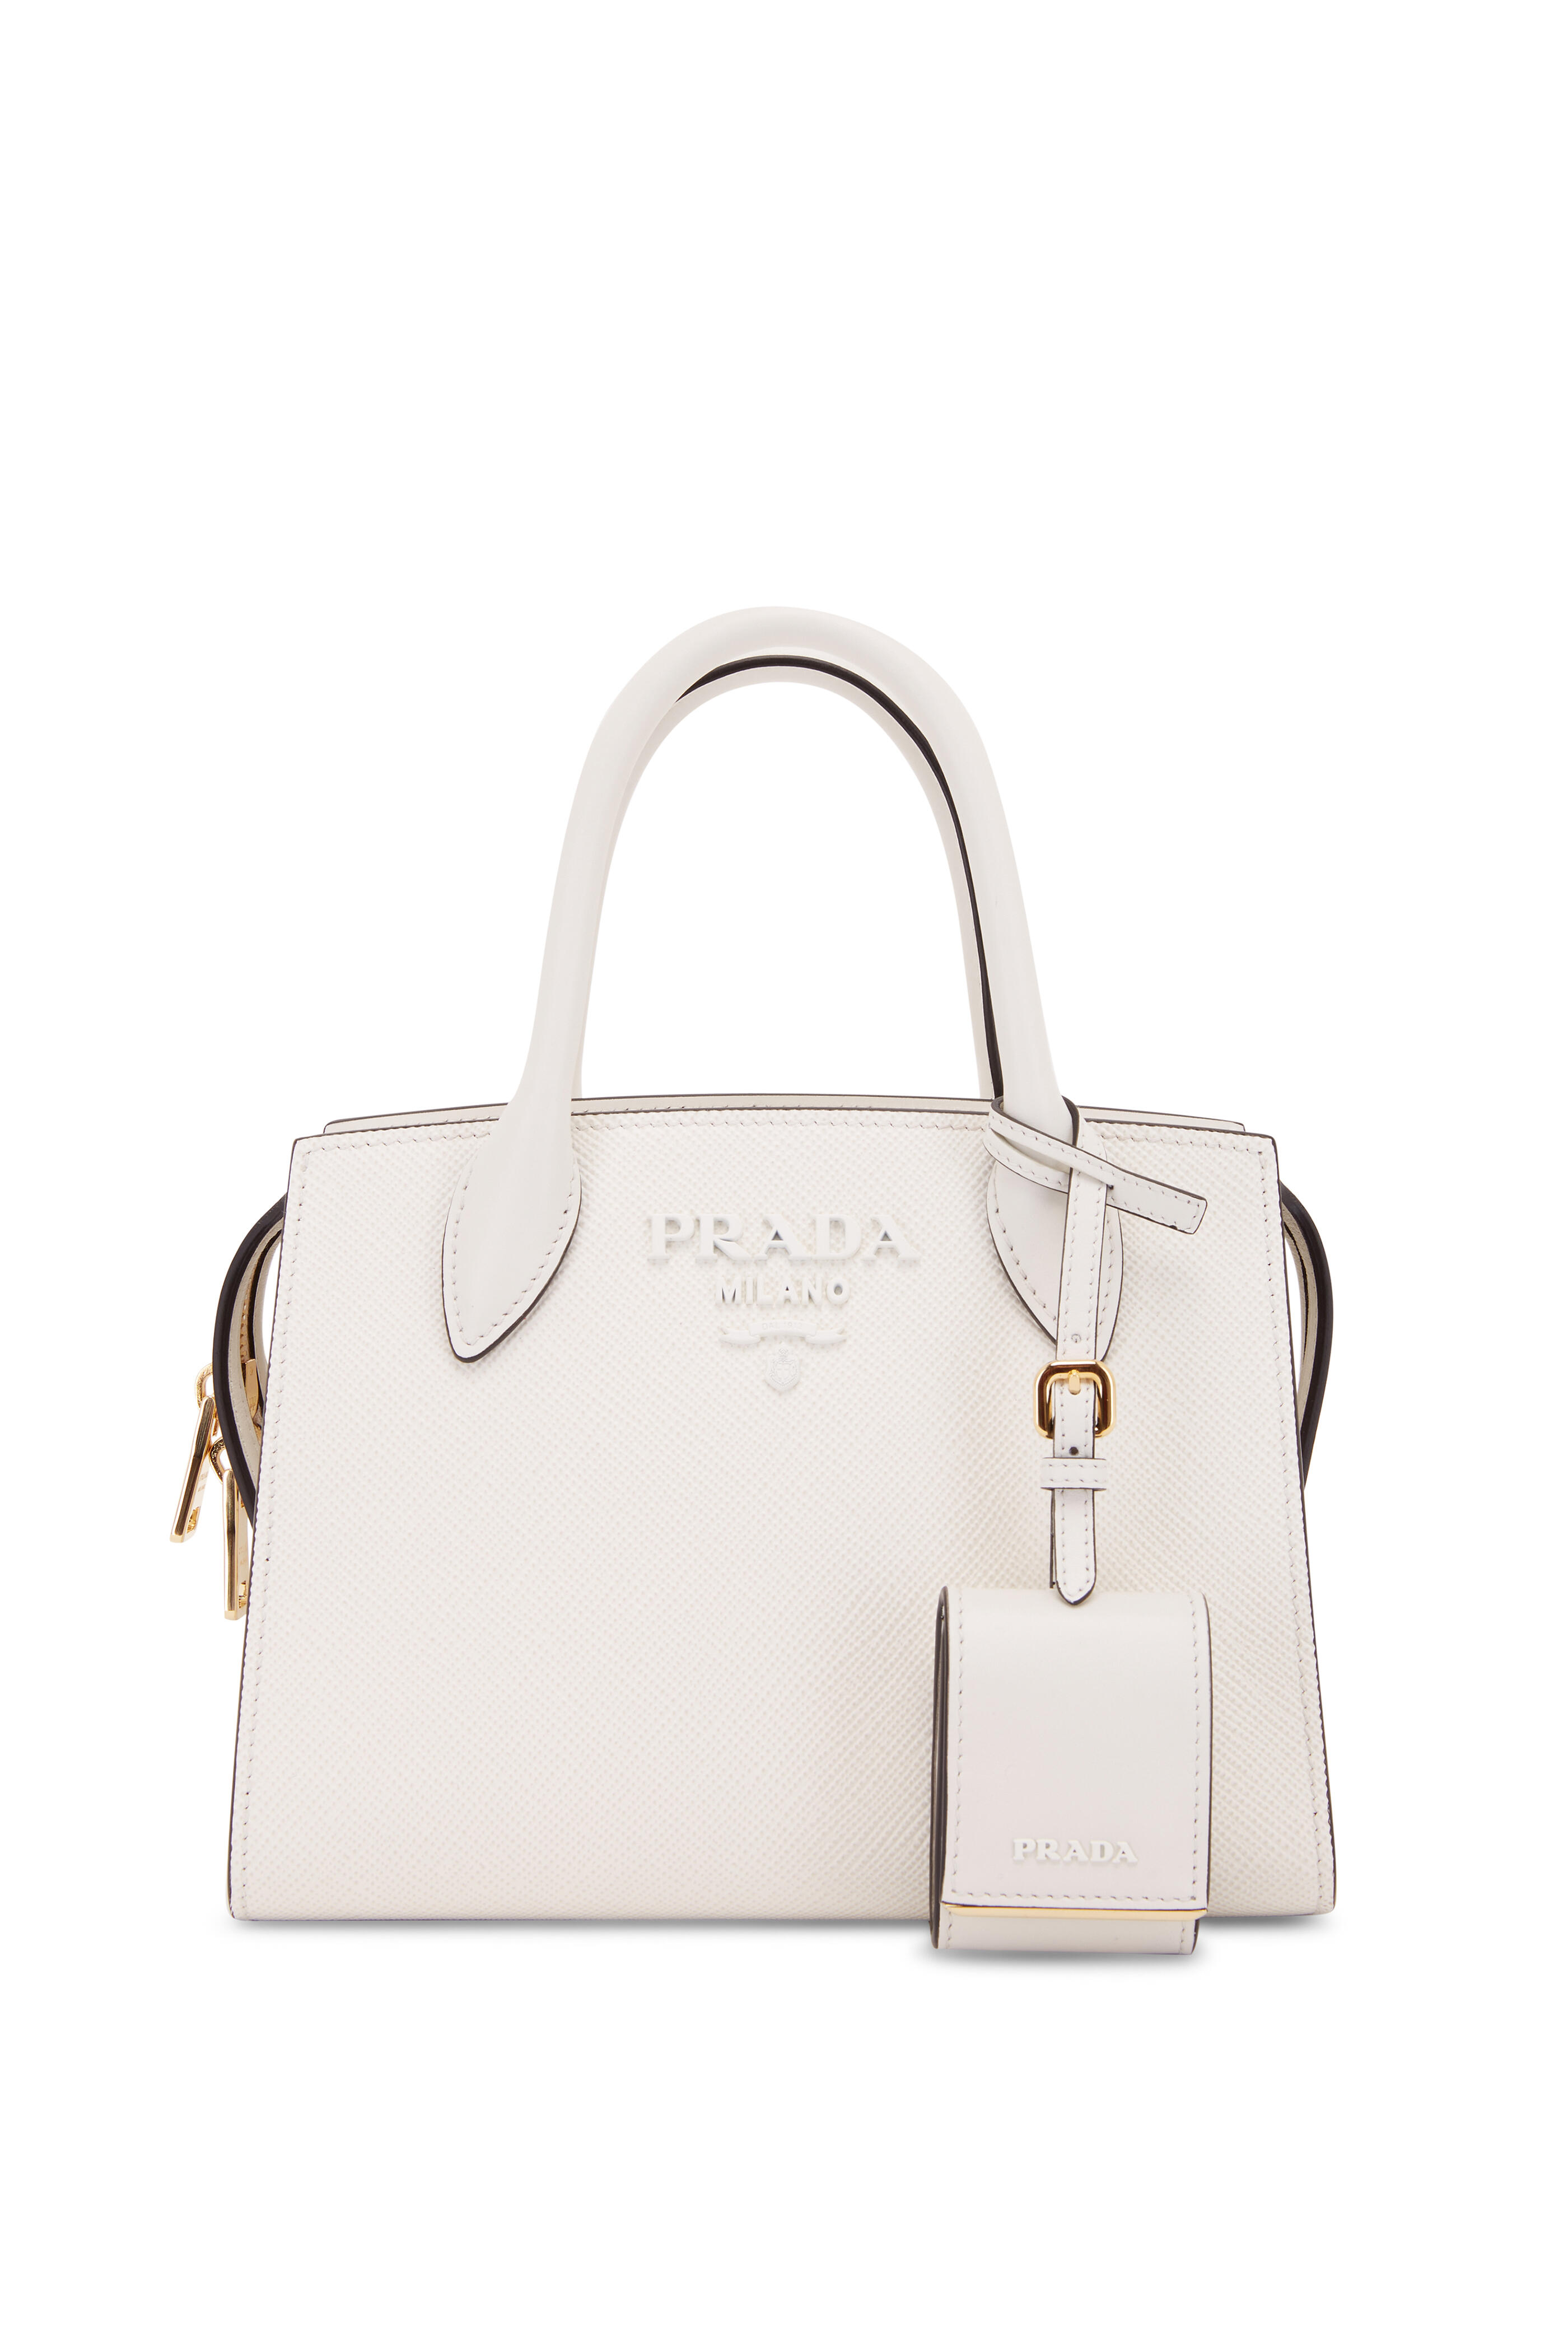 Prada Galleria Shearling Mini Bag, White, One Size